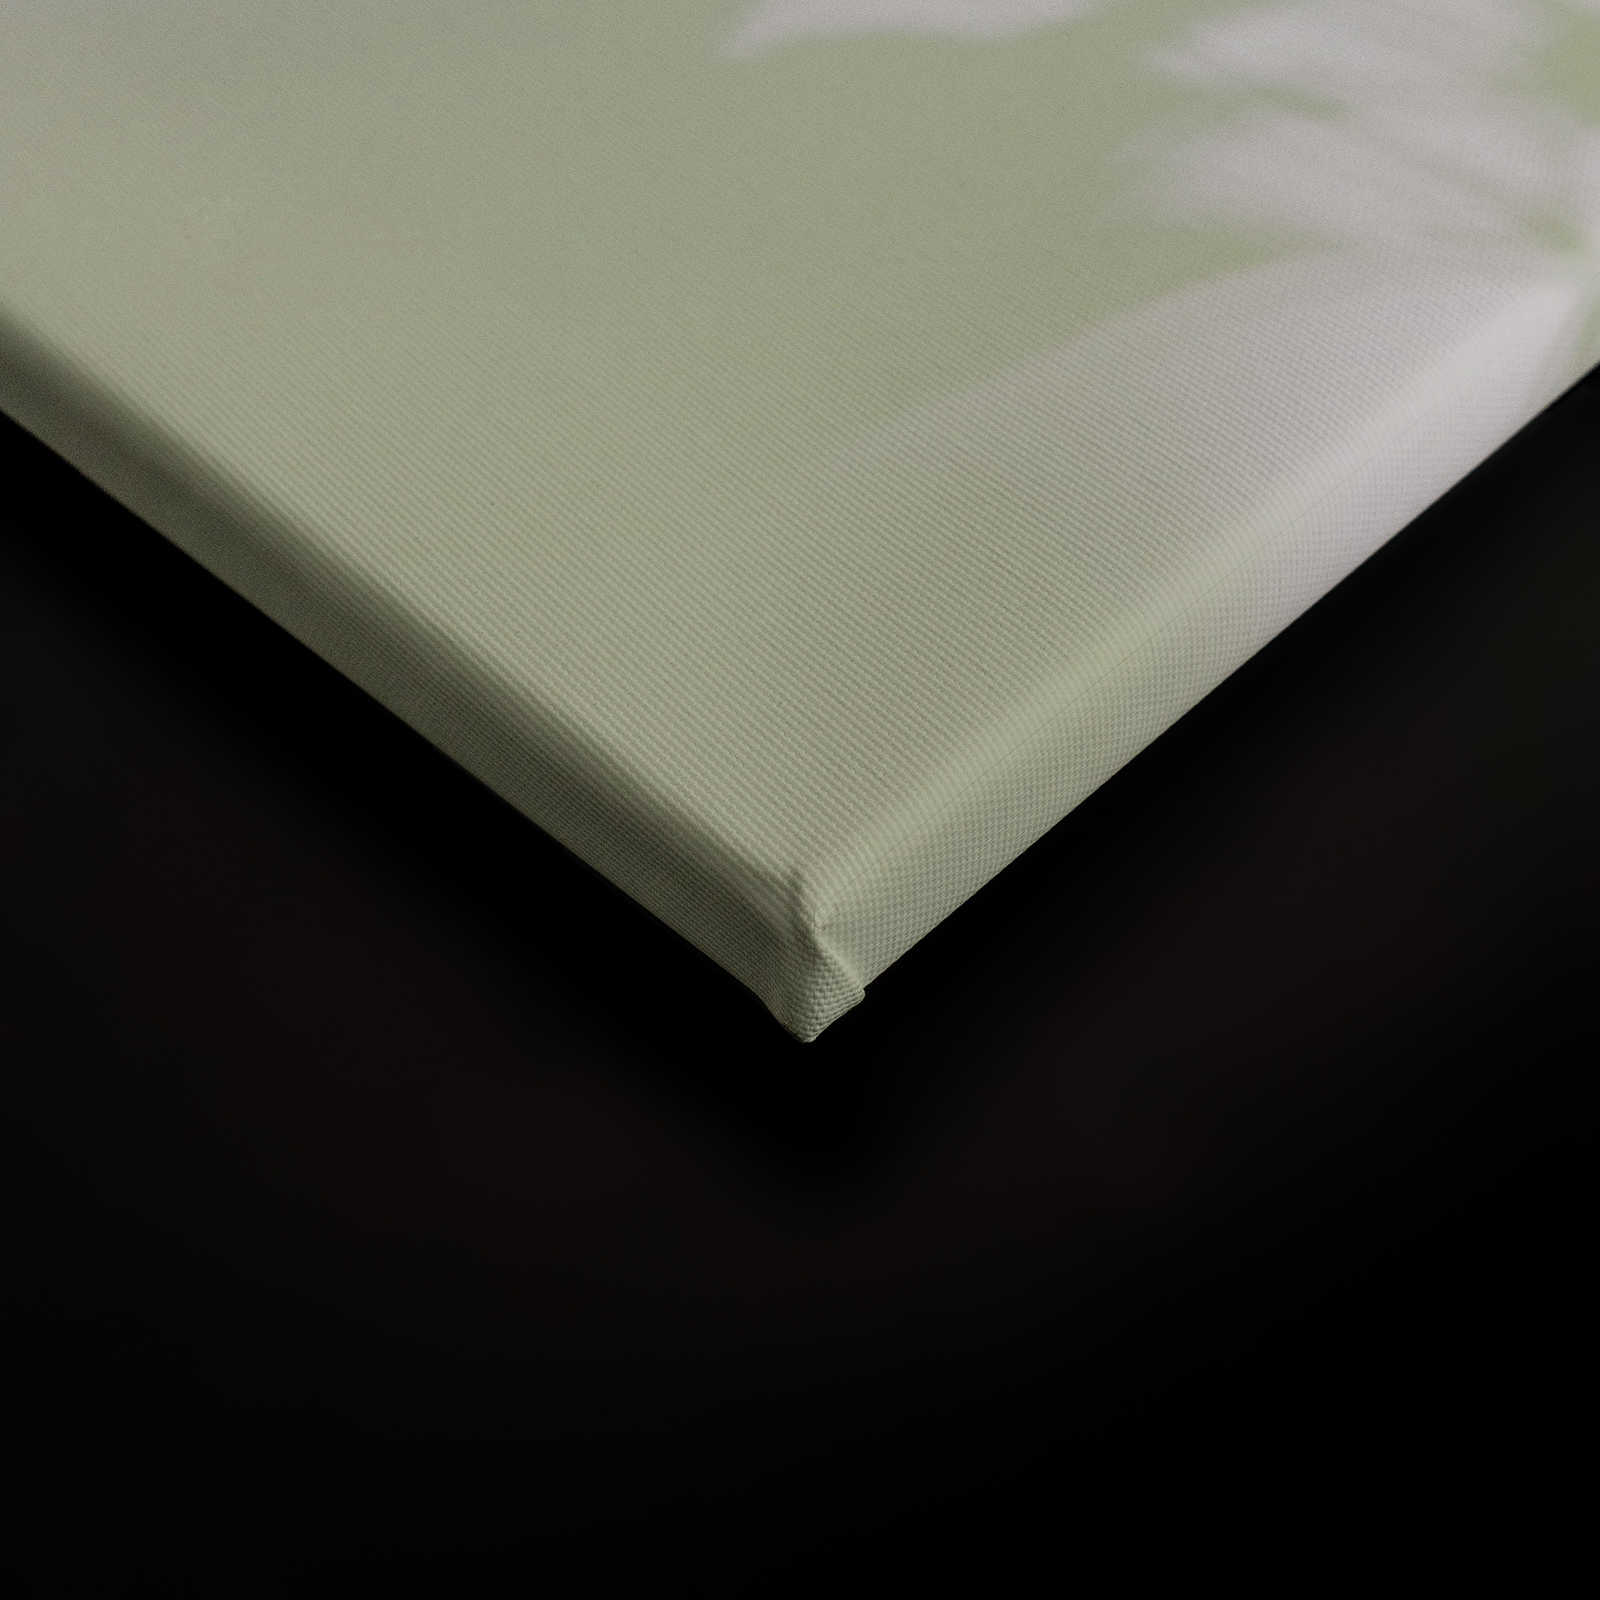             Shadow Room 3 - Natur Leinwandbild Grün & Weiß, verblasstes Design – 1,20 m x 0,80 m
        